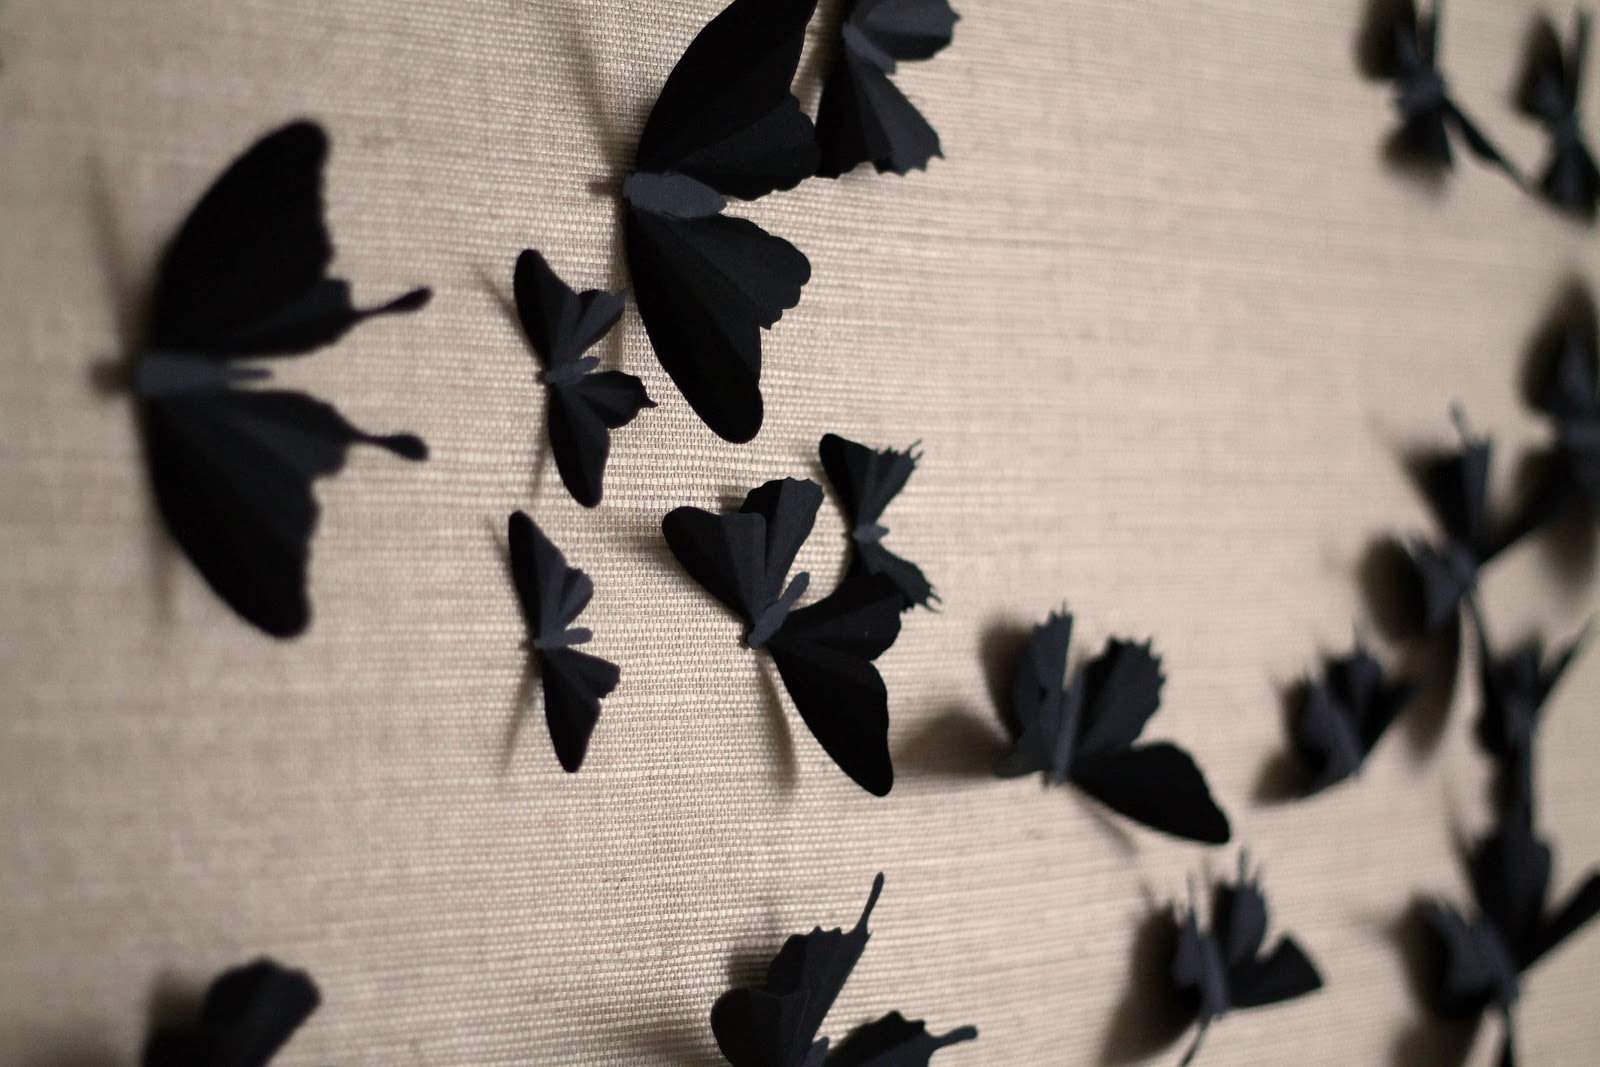 Декор стен бабочками своими руками +60 фото идей